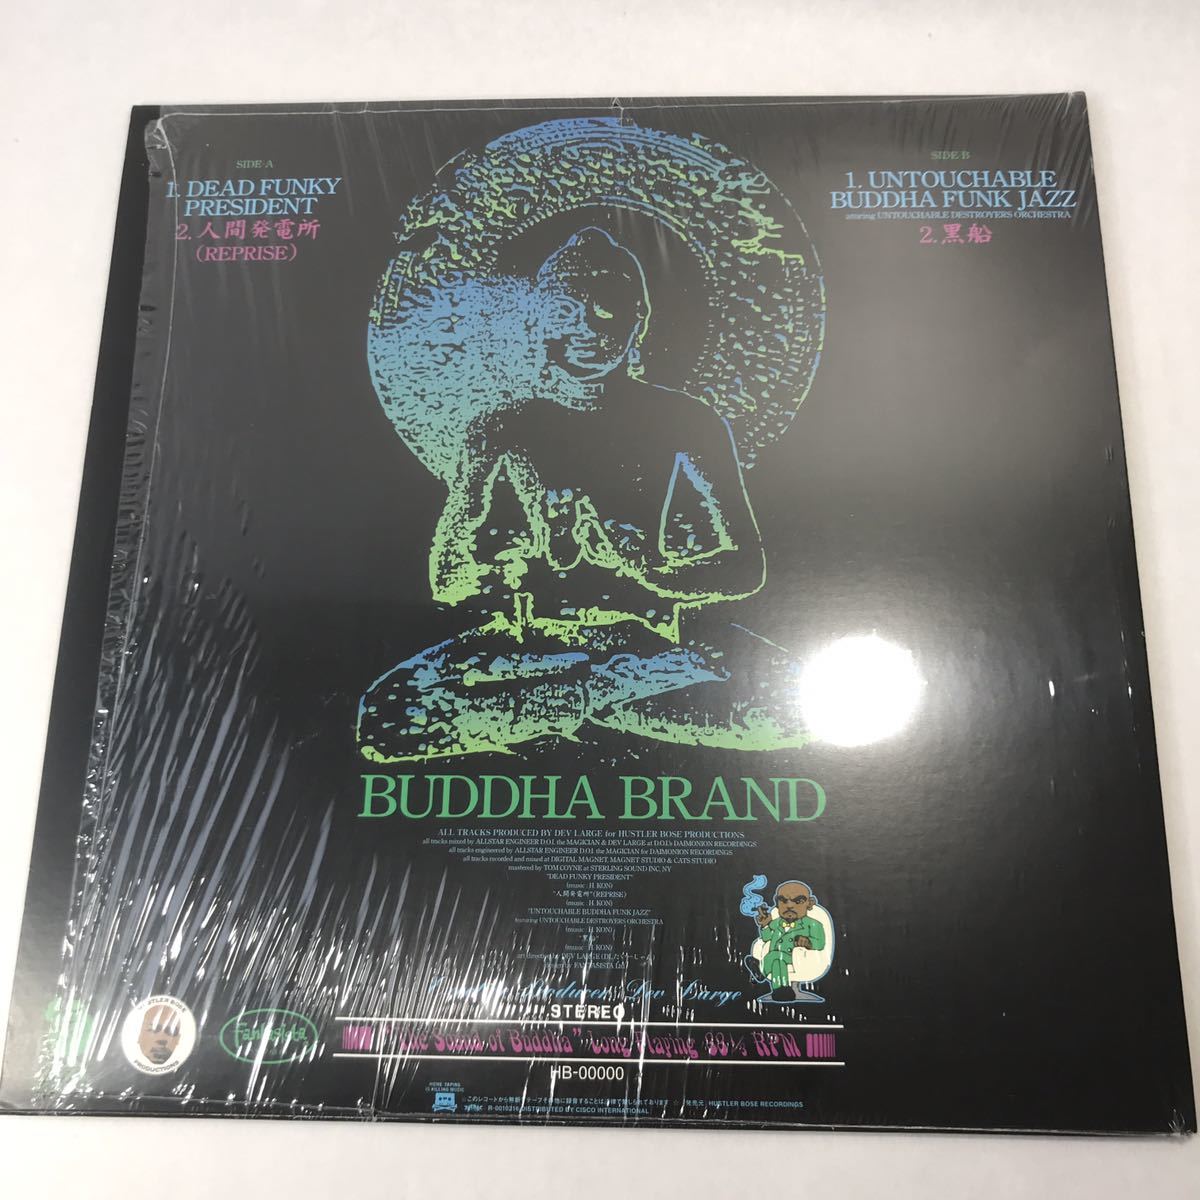 Buddha Brand / Dead Funky President, Untouchable Buddha Funk Jazz / Dev Large_画像7